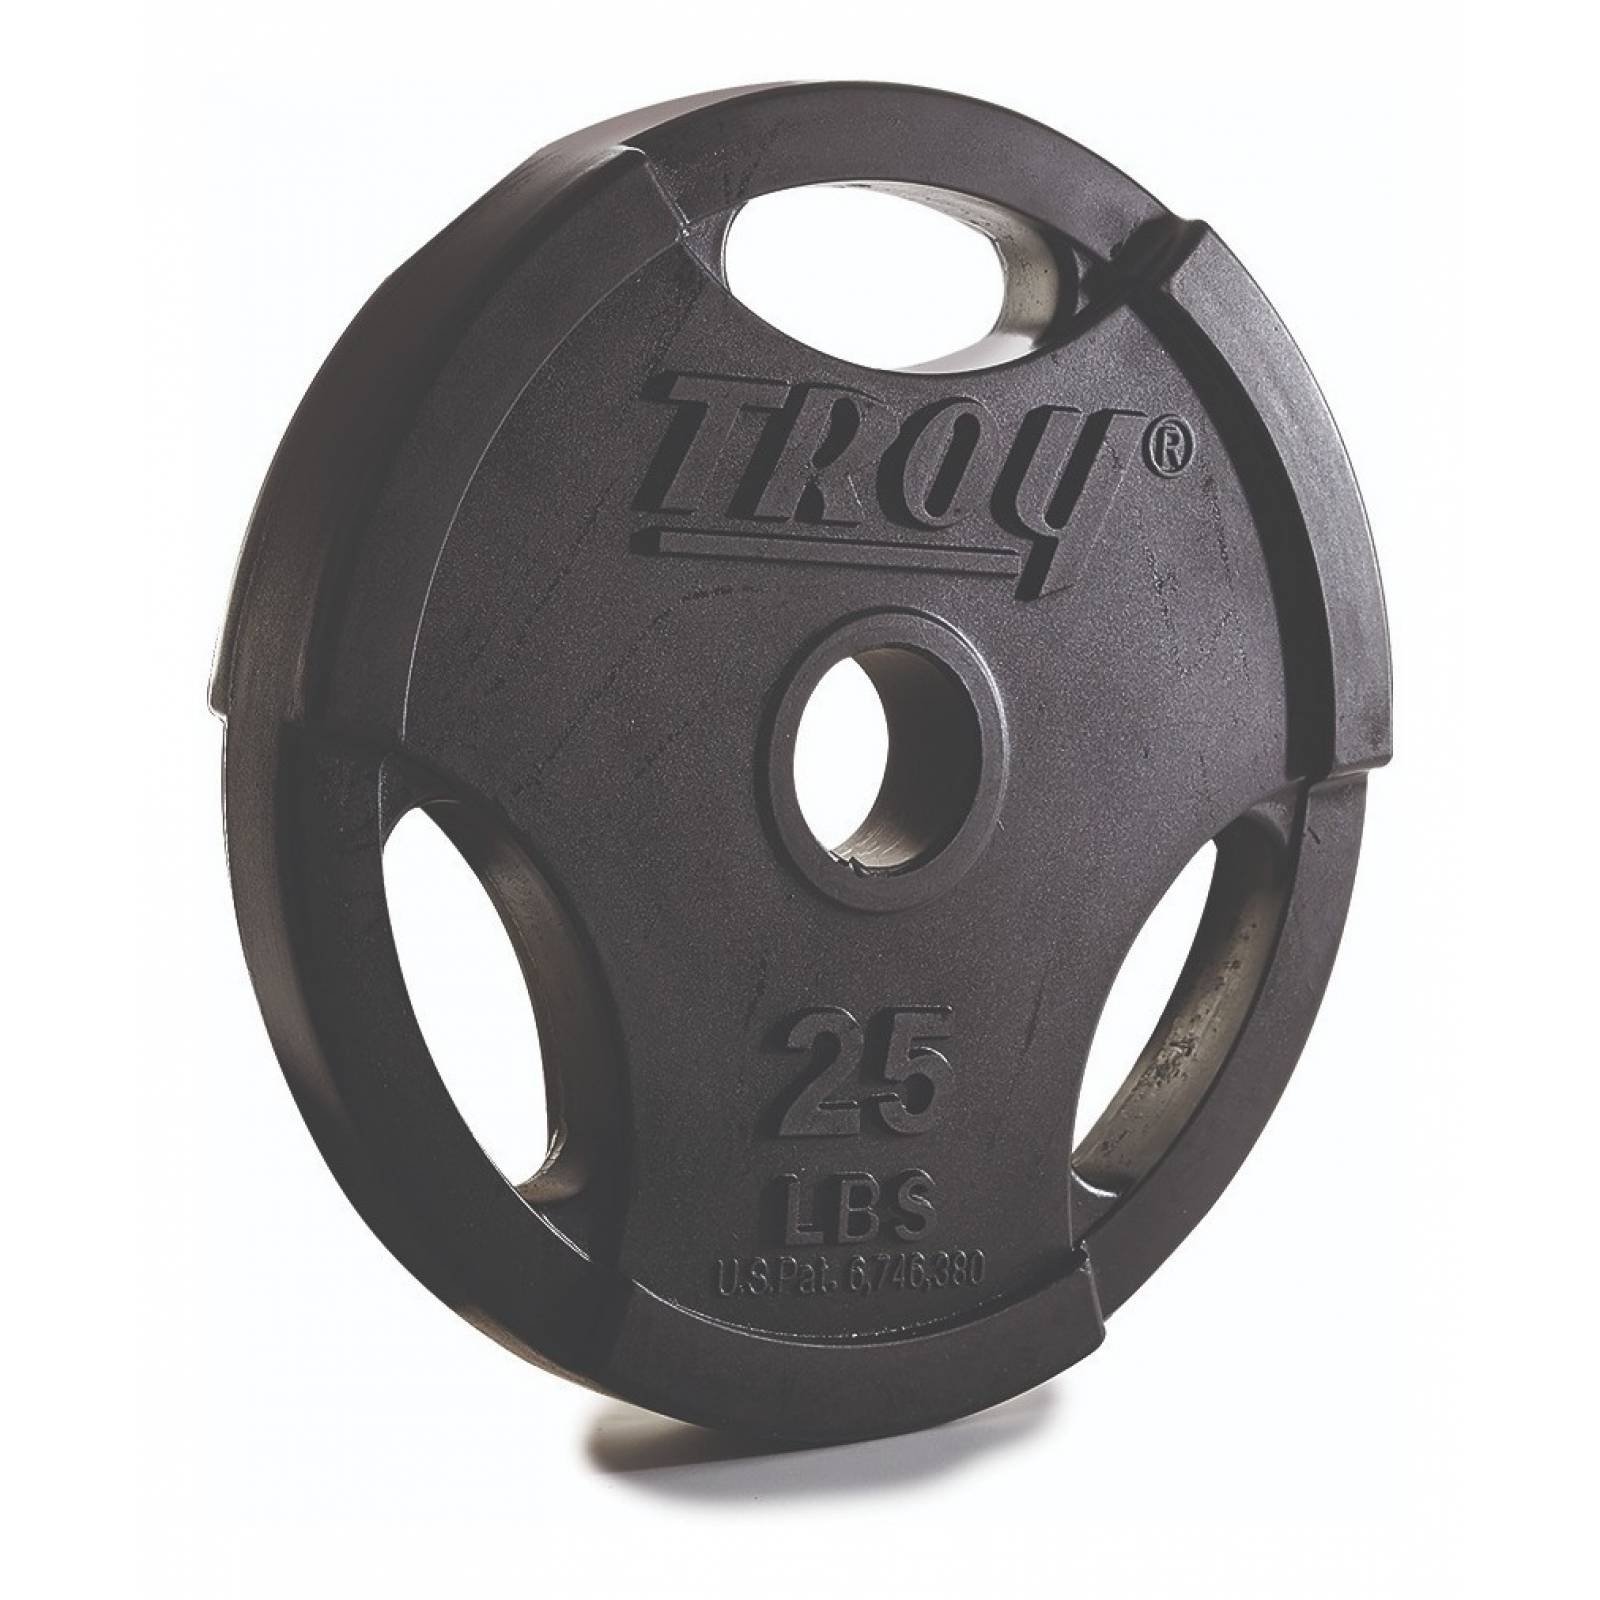 Disco Olimpico 25Lb Troy Rubber Inter-locking Grip Plate